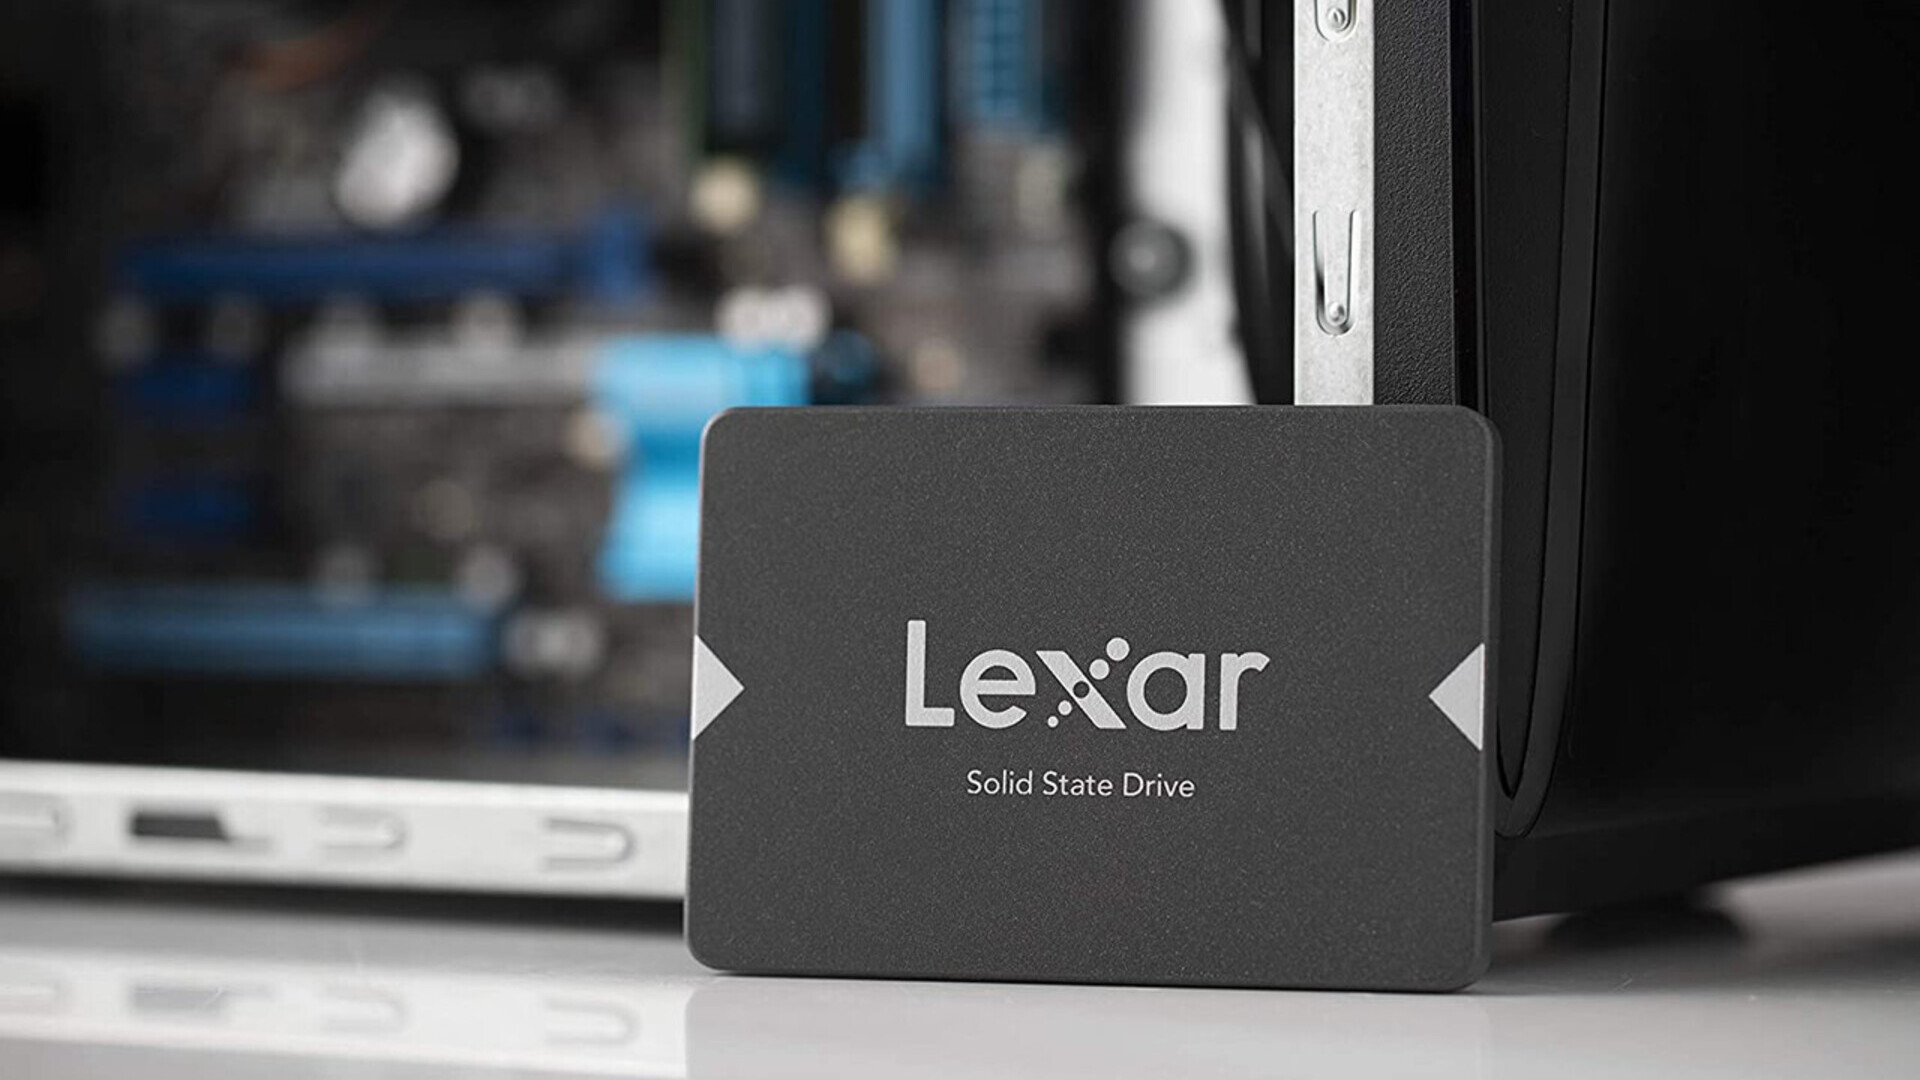 Features of the Lexar NS100 2.5” SATA III Internal SSD